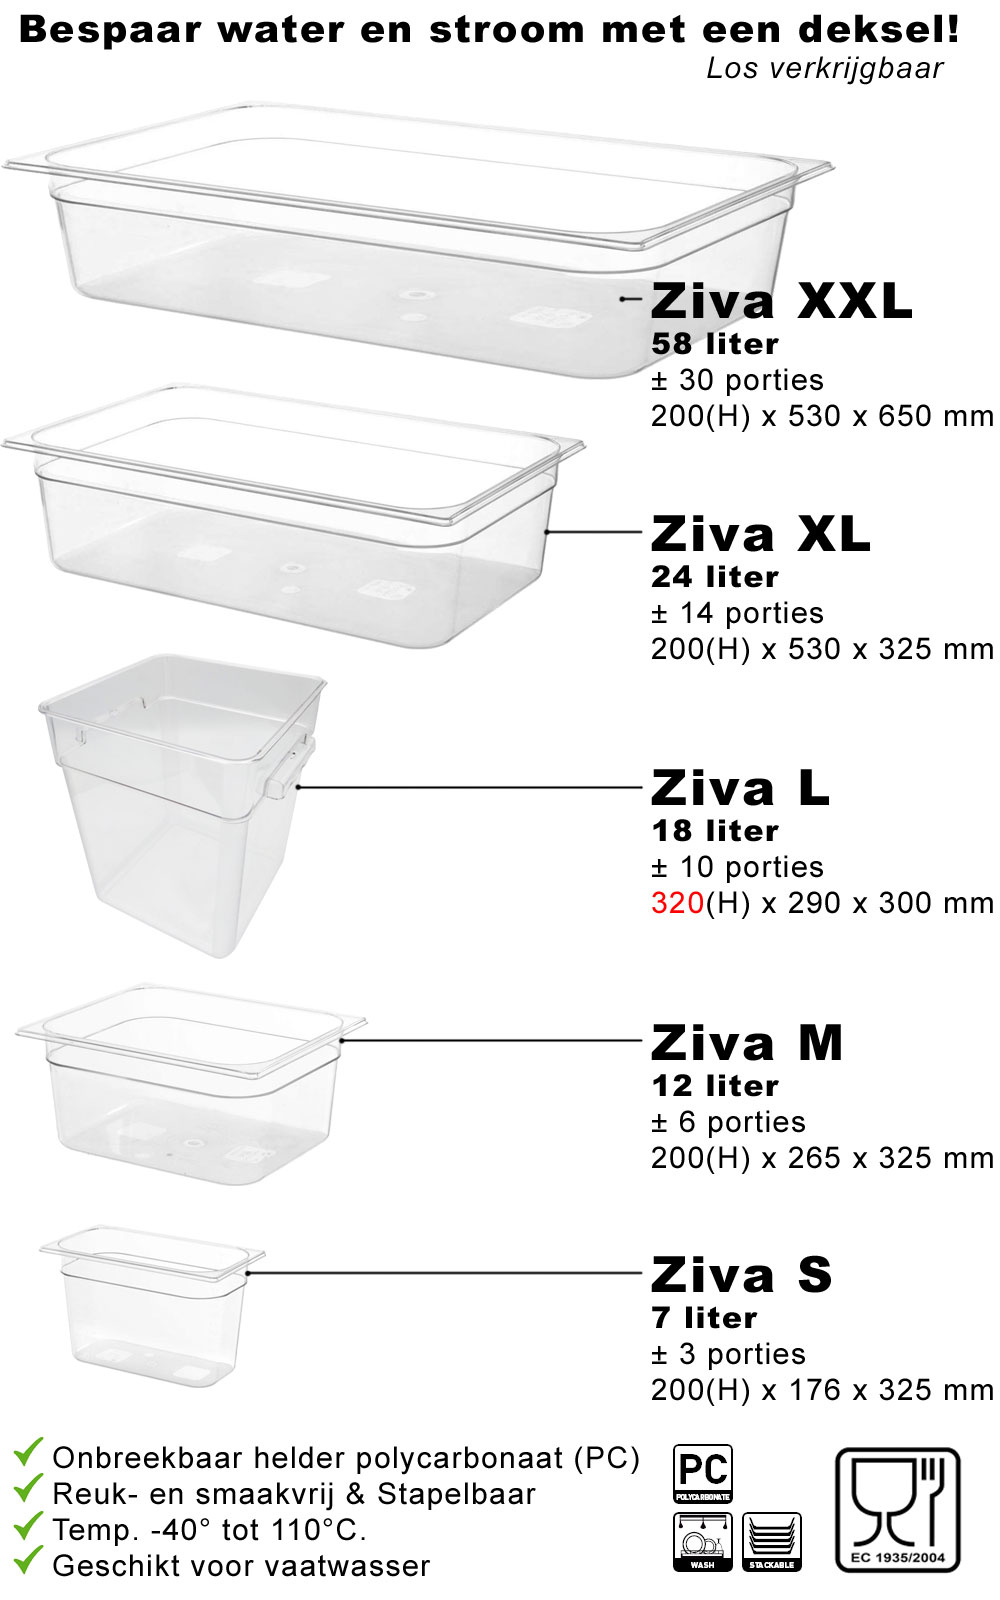 Ziva Sense + Ziva SlimTouch + 18 liter bundle